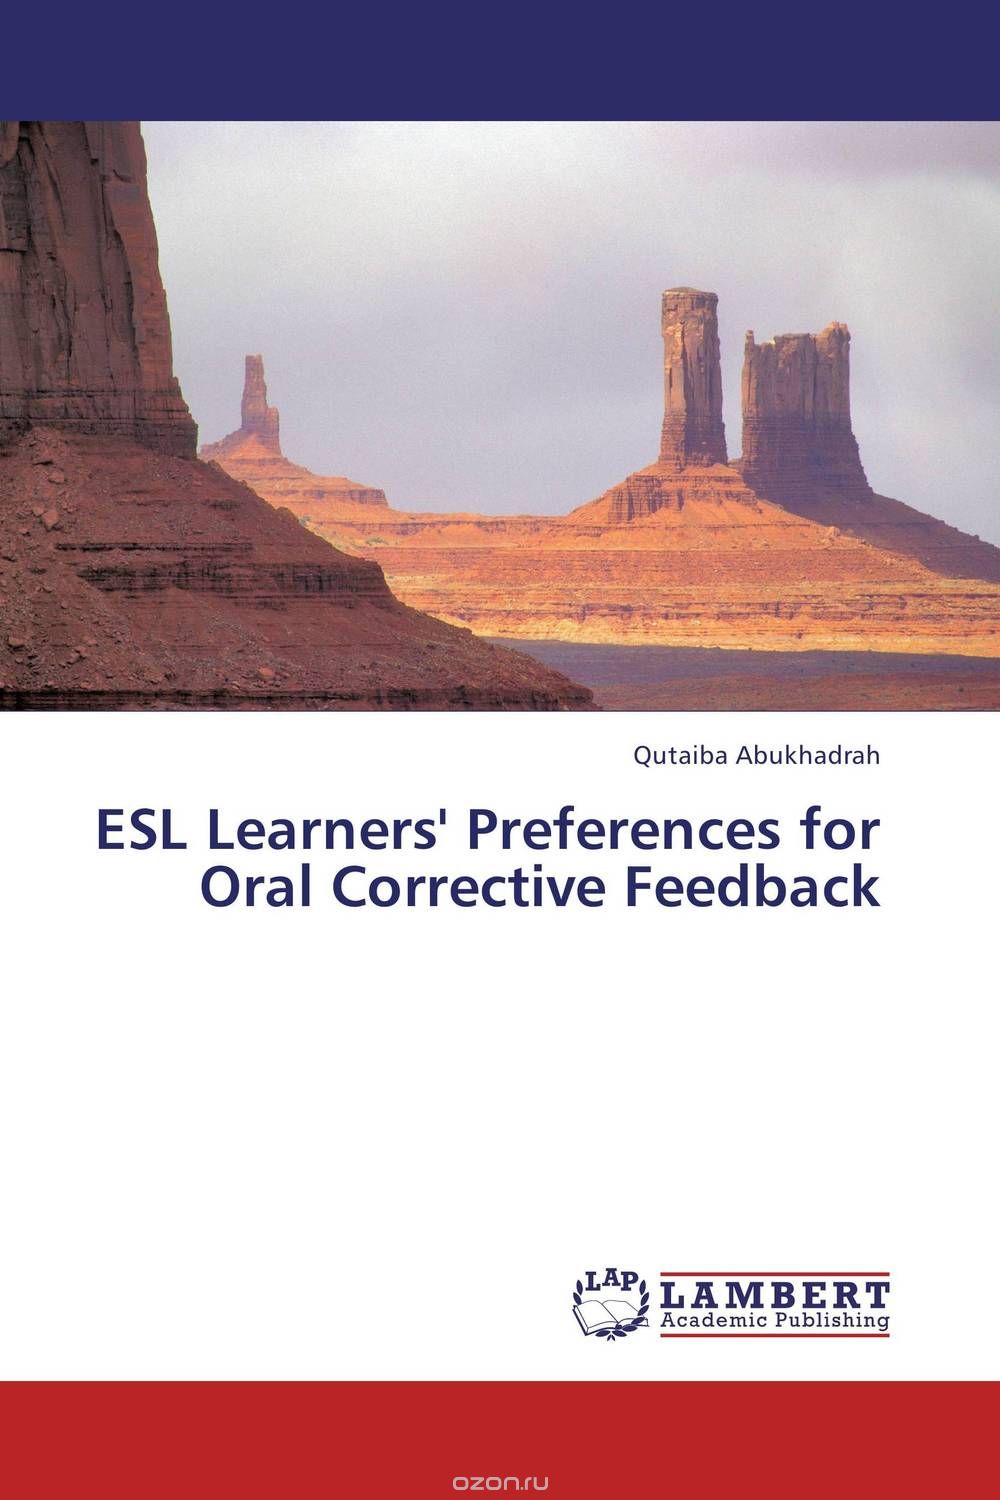 Скачать книгу "ESL Learners' Preferences for Oral Corrective Feedback"